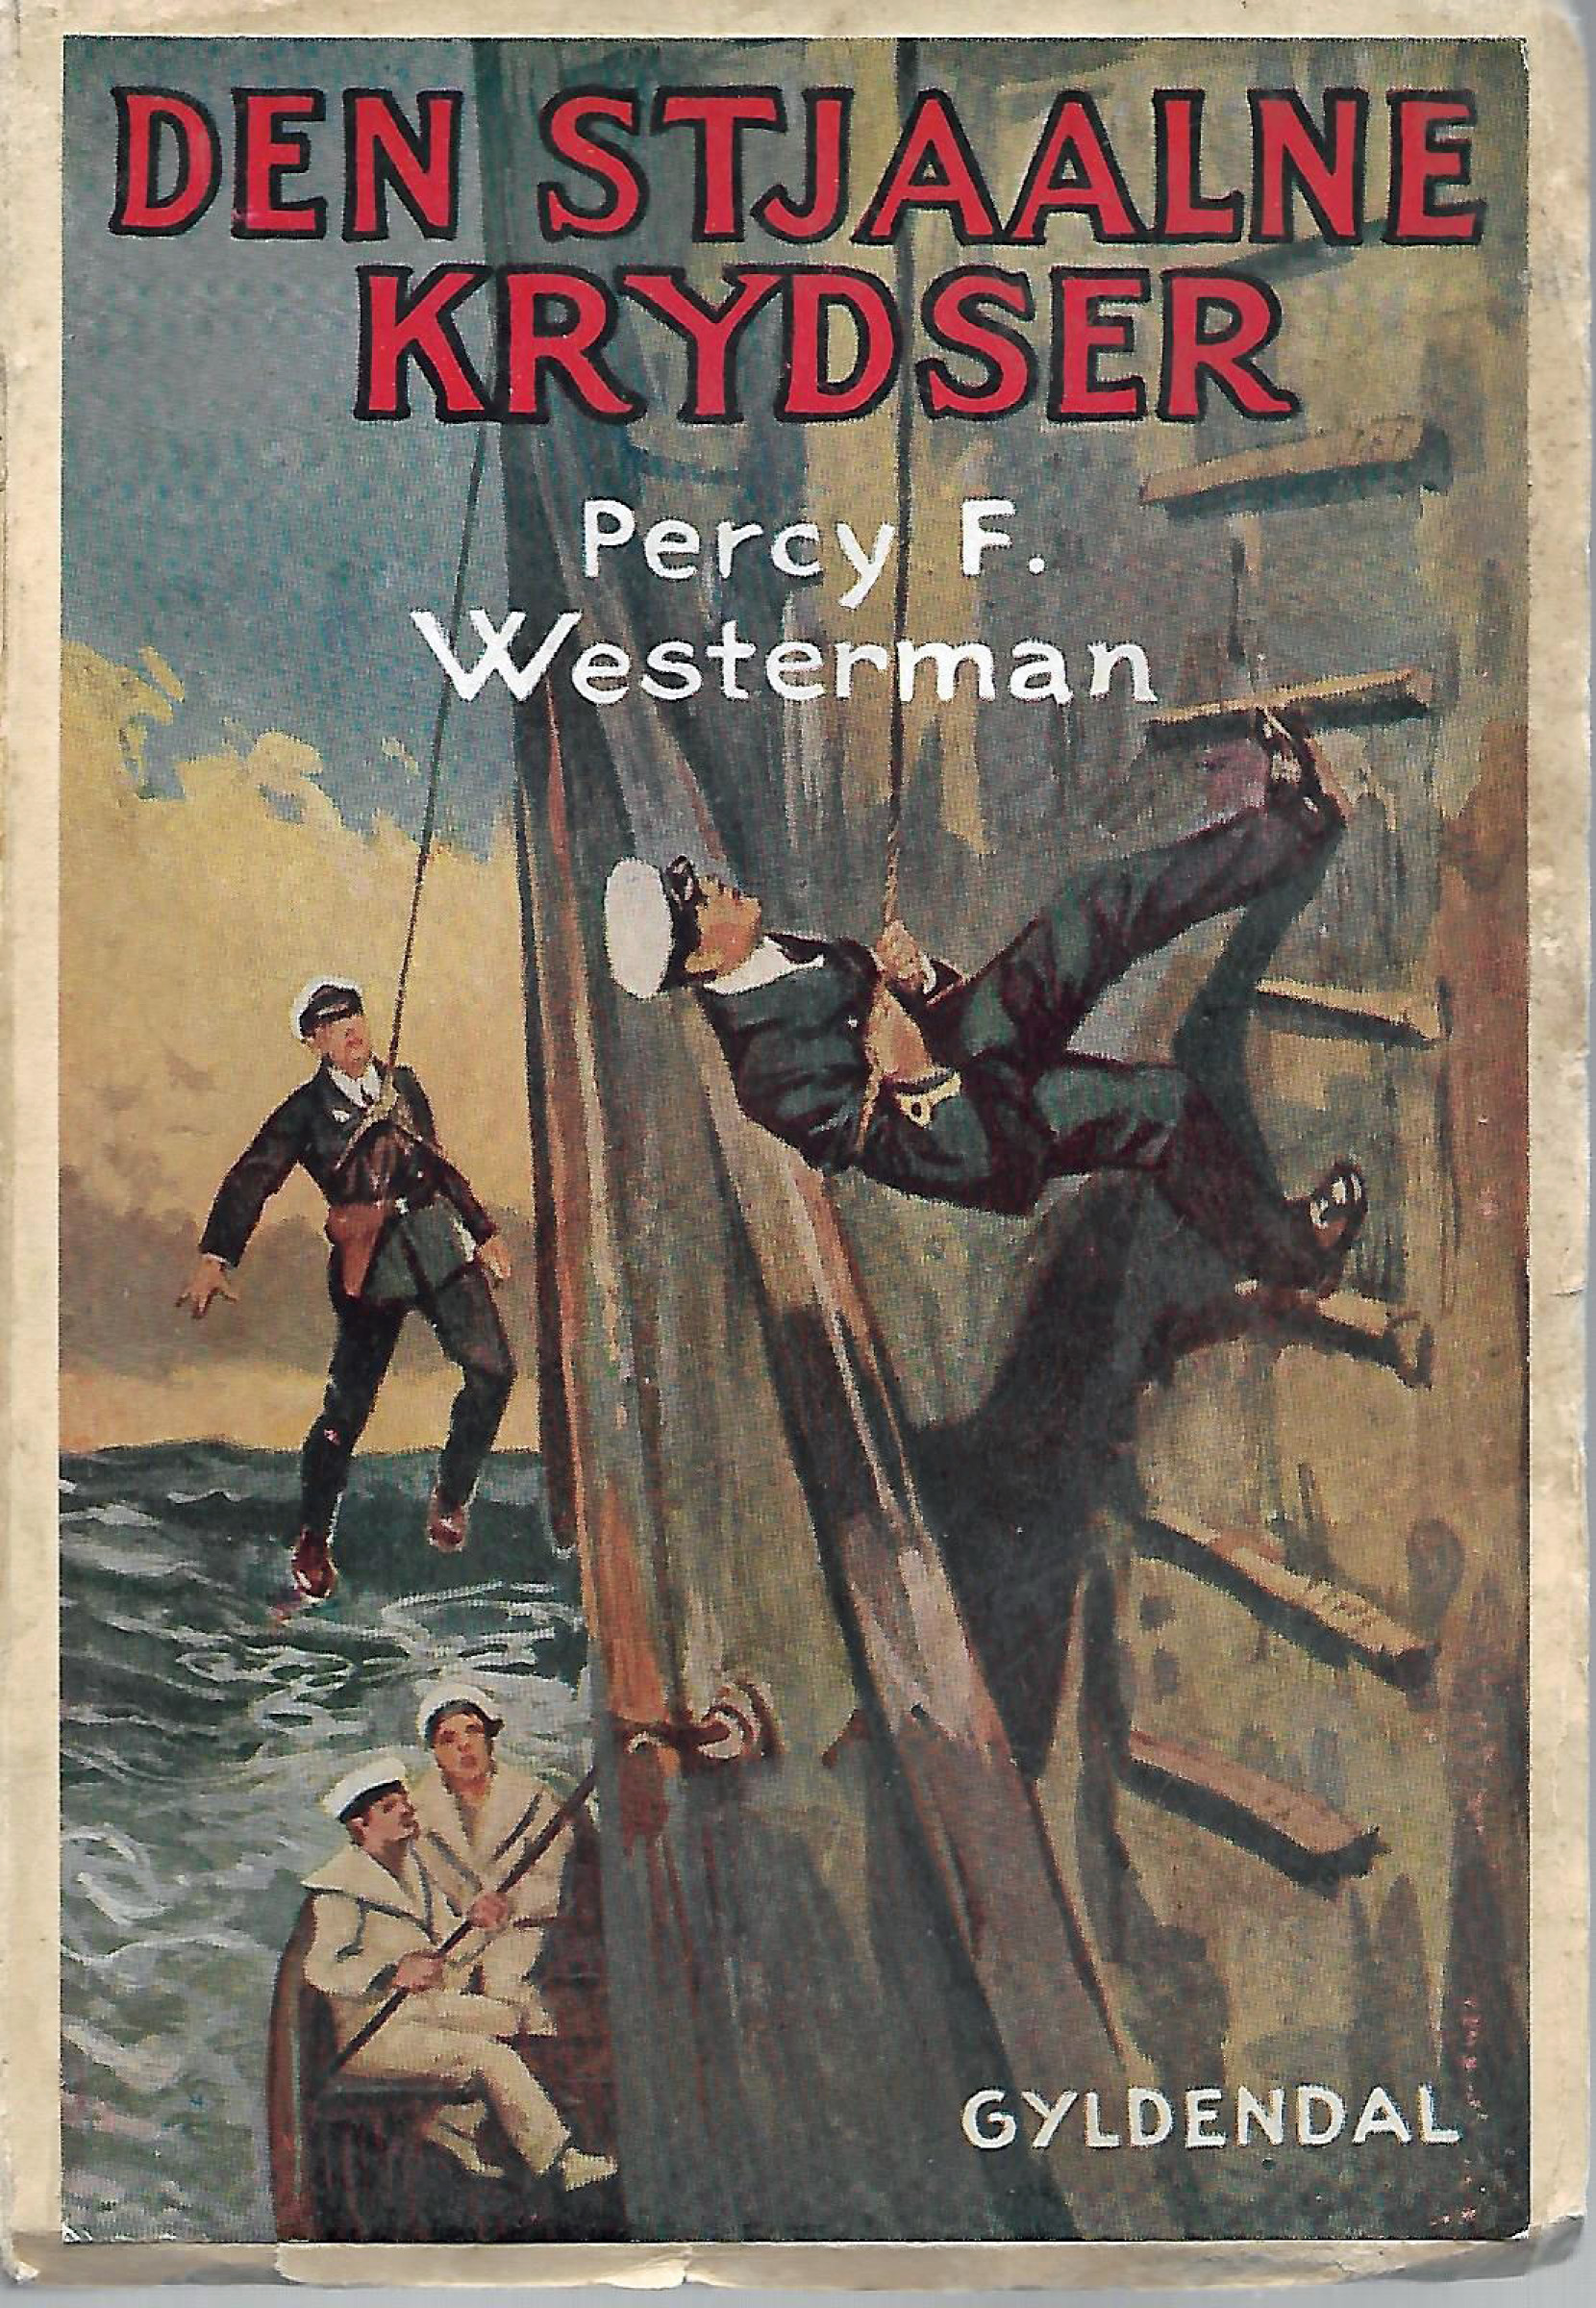 Den stjaalne krydser - Percy F Westerman